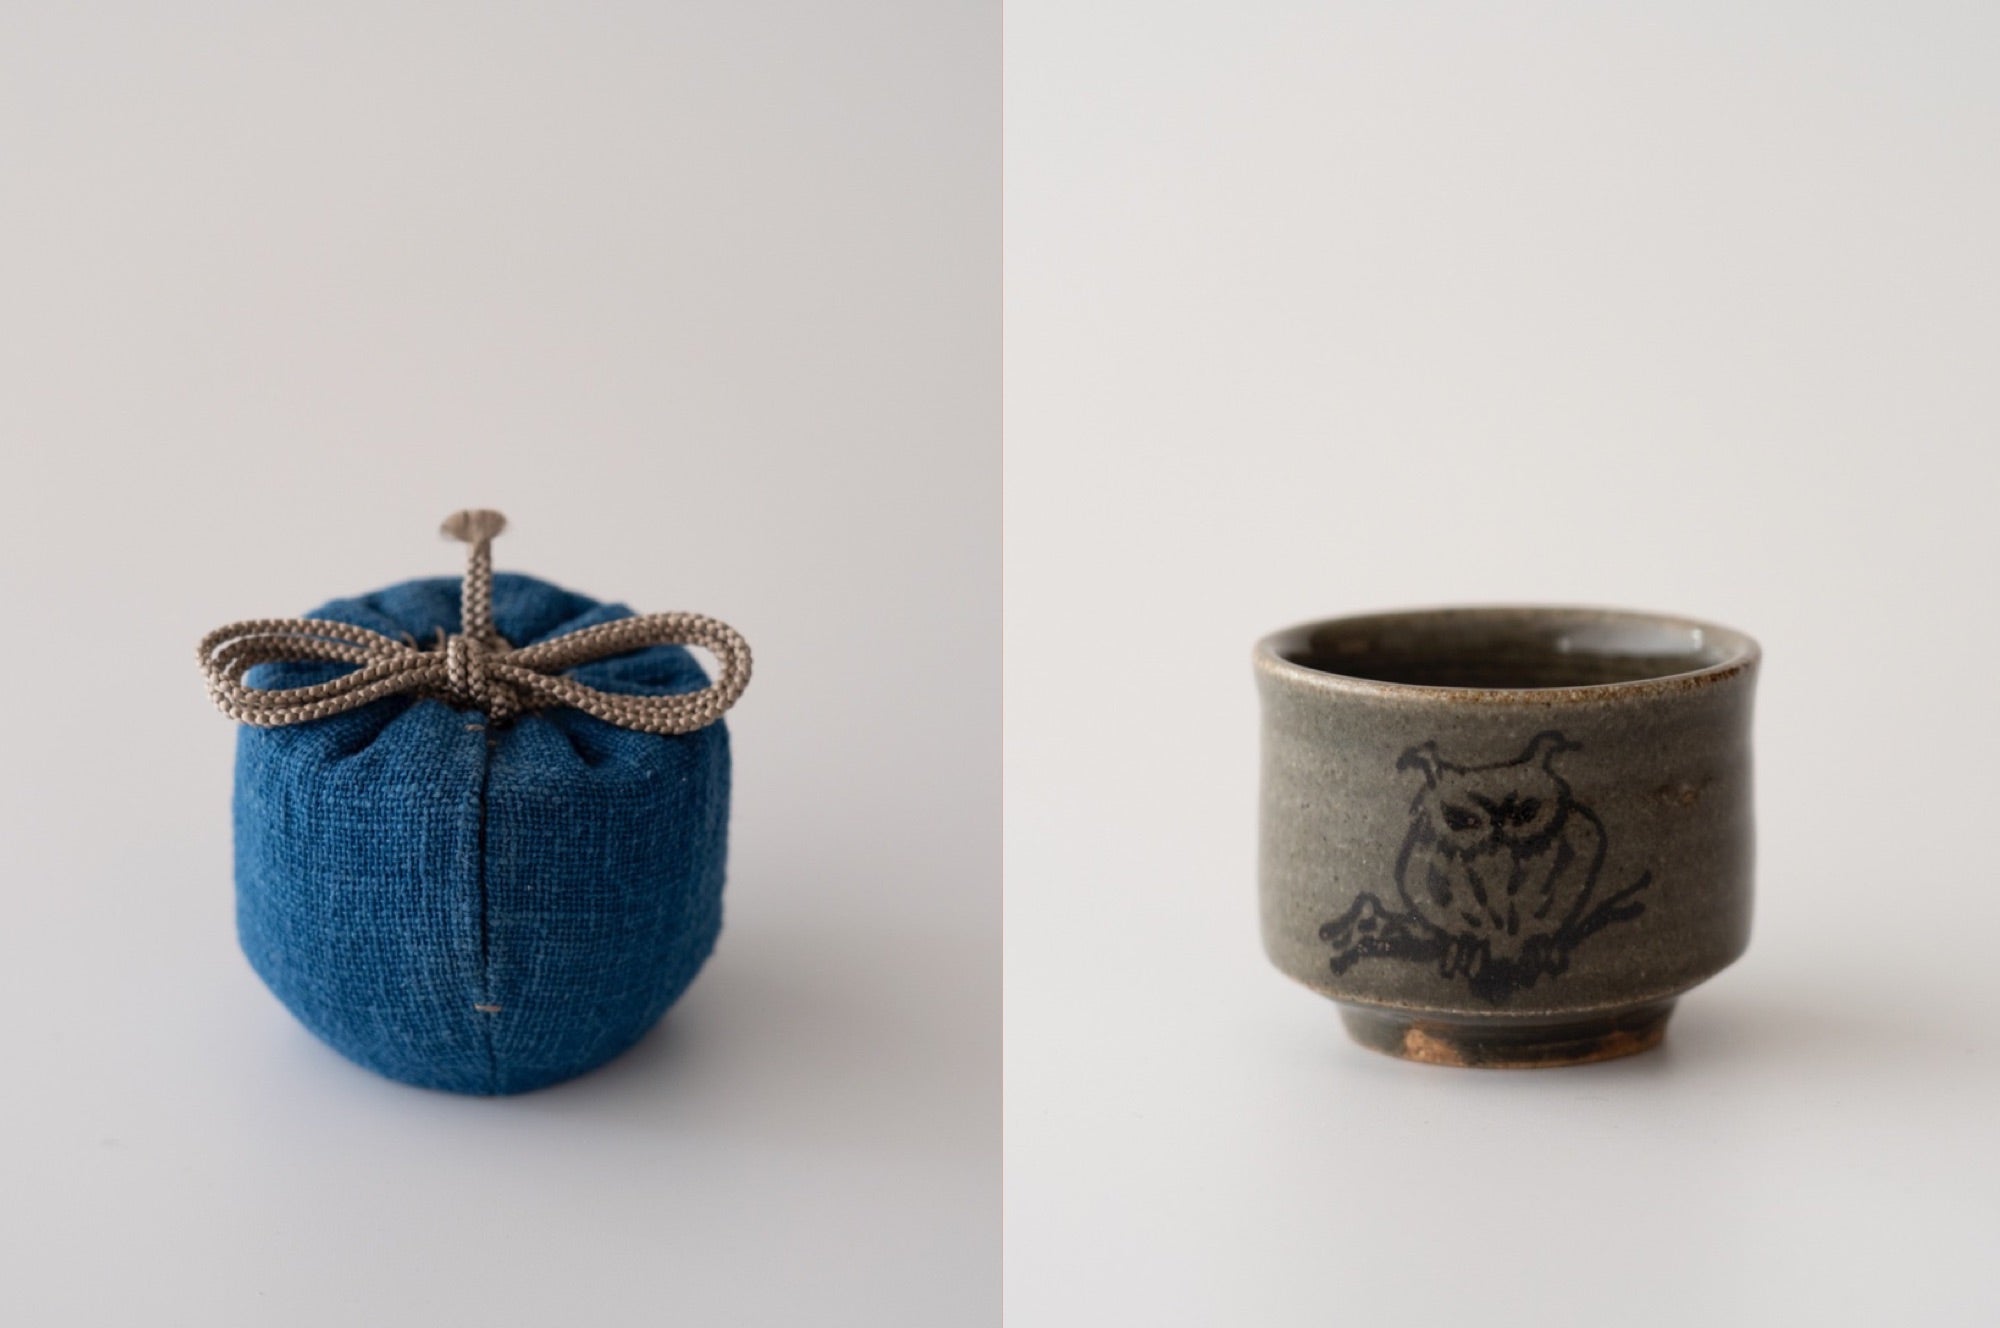 Sake cup with owl design, Bernard Leach